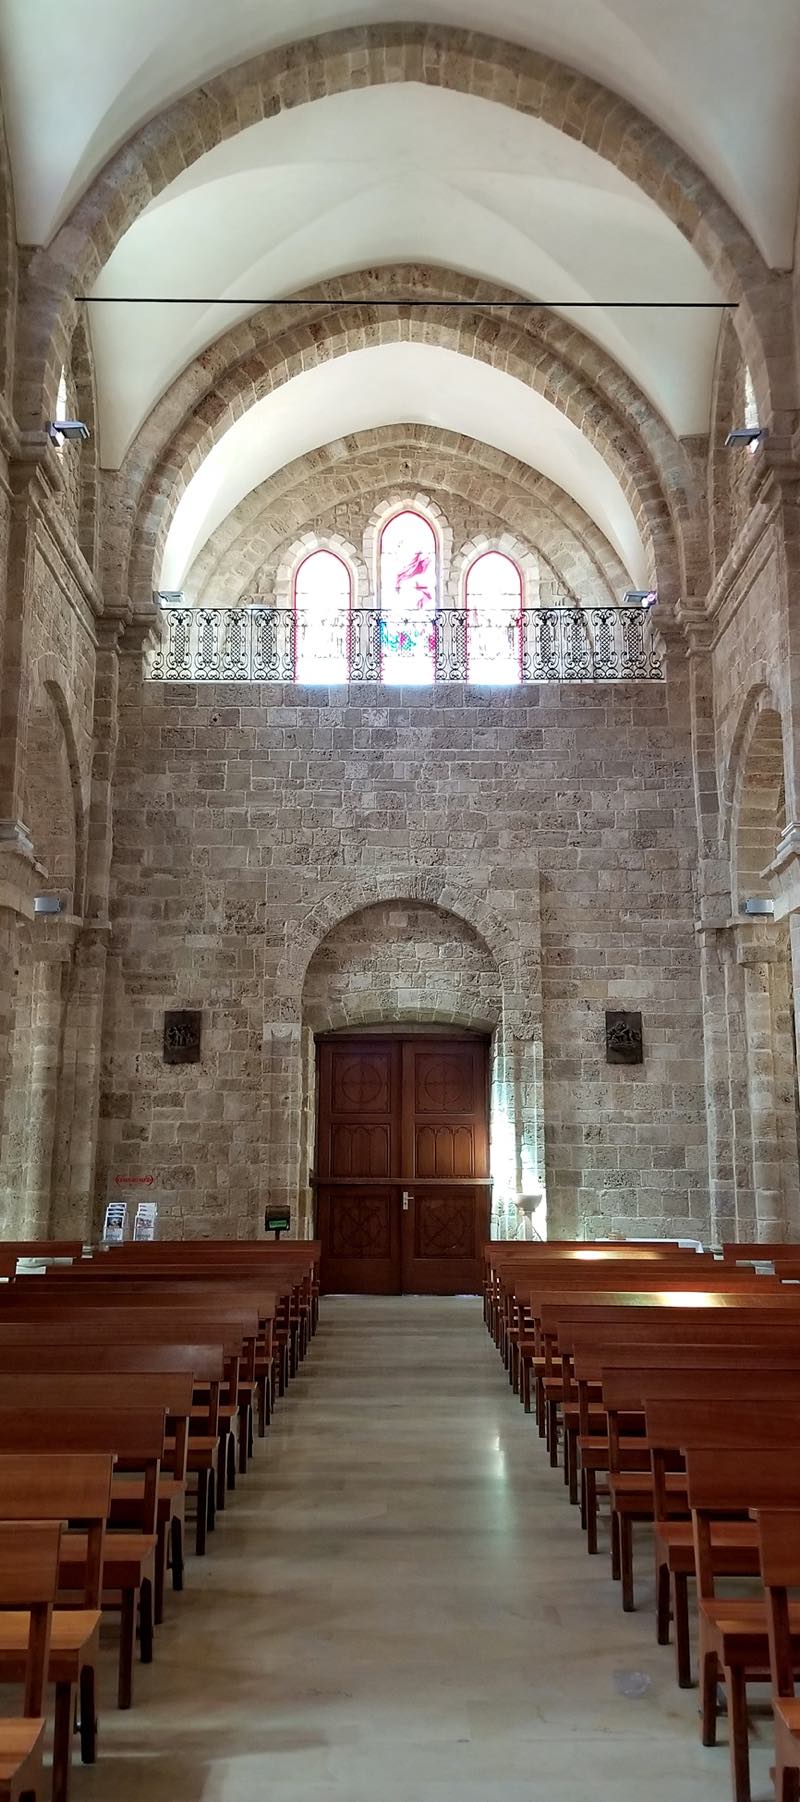 View along nave toward entrance.